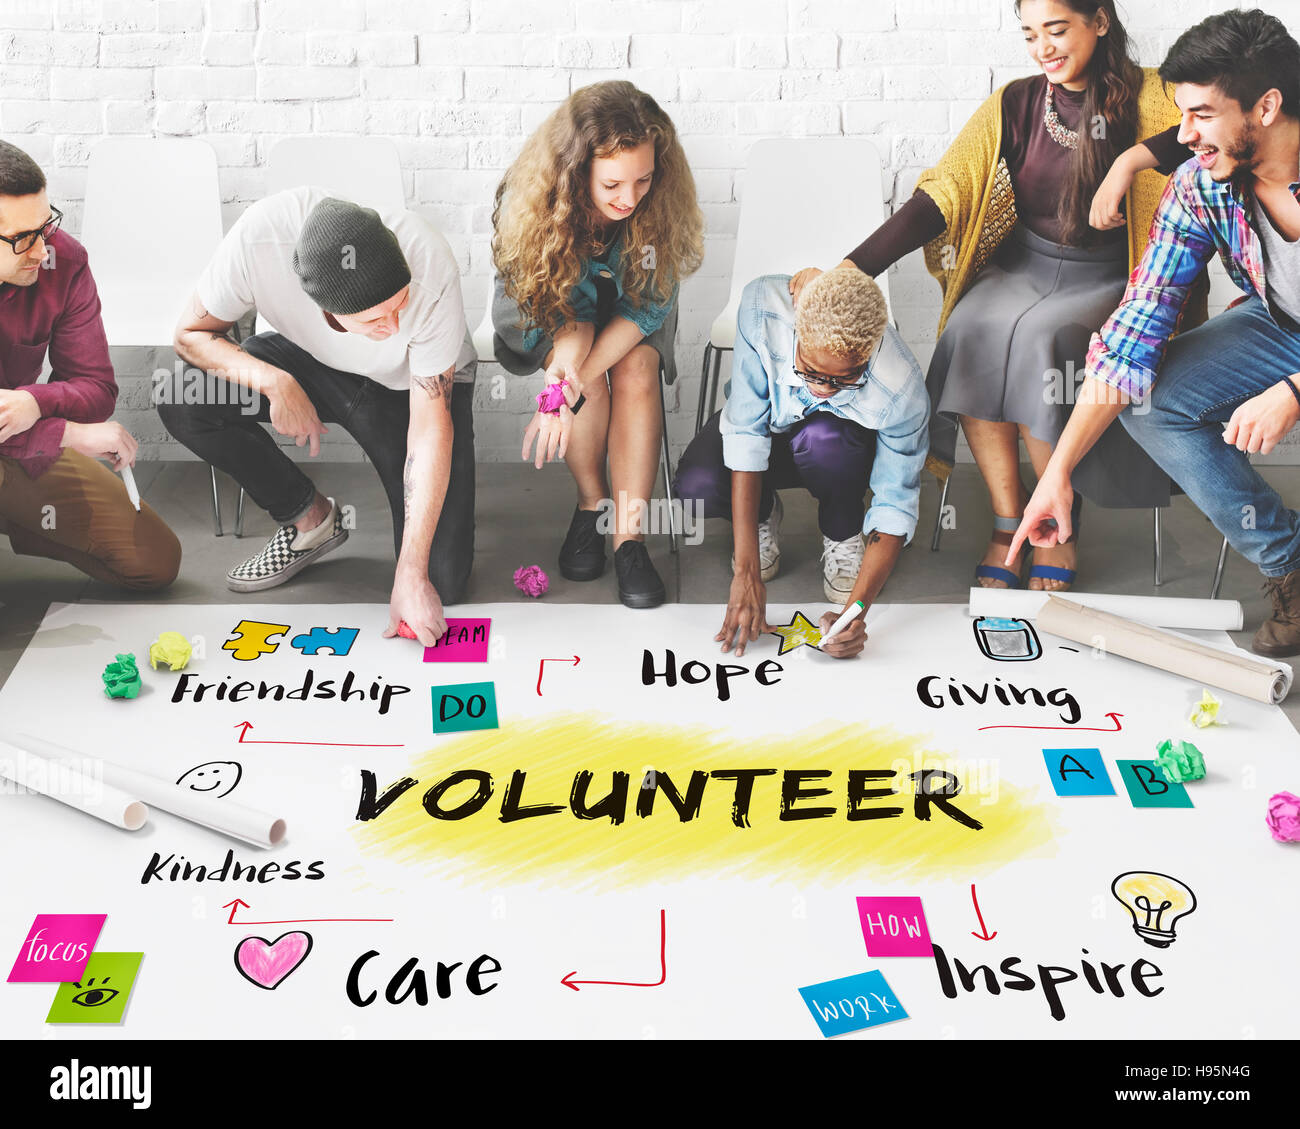 Volunteer Help Donation Hope Kindness Concept Stock Photo